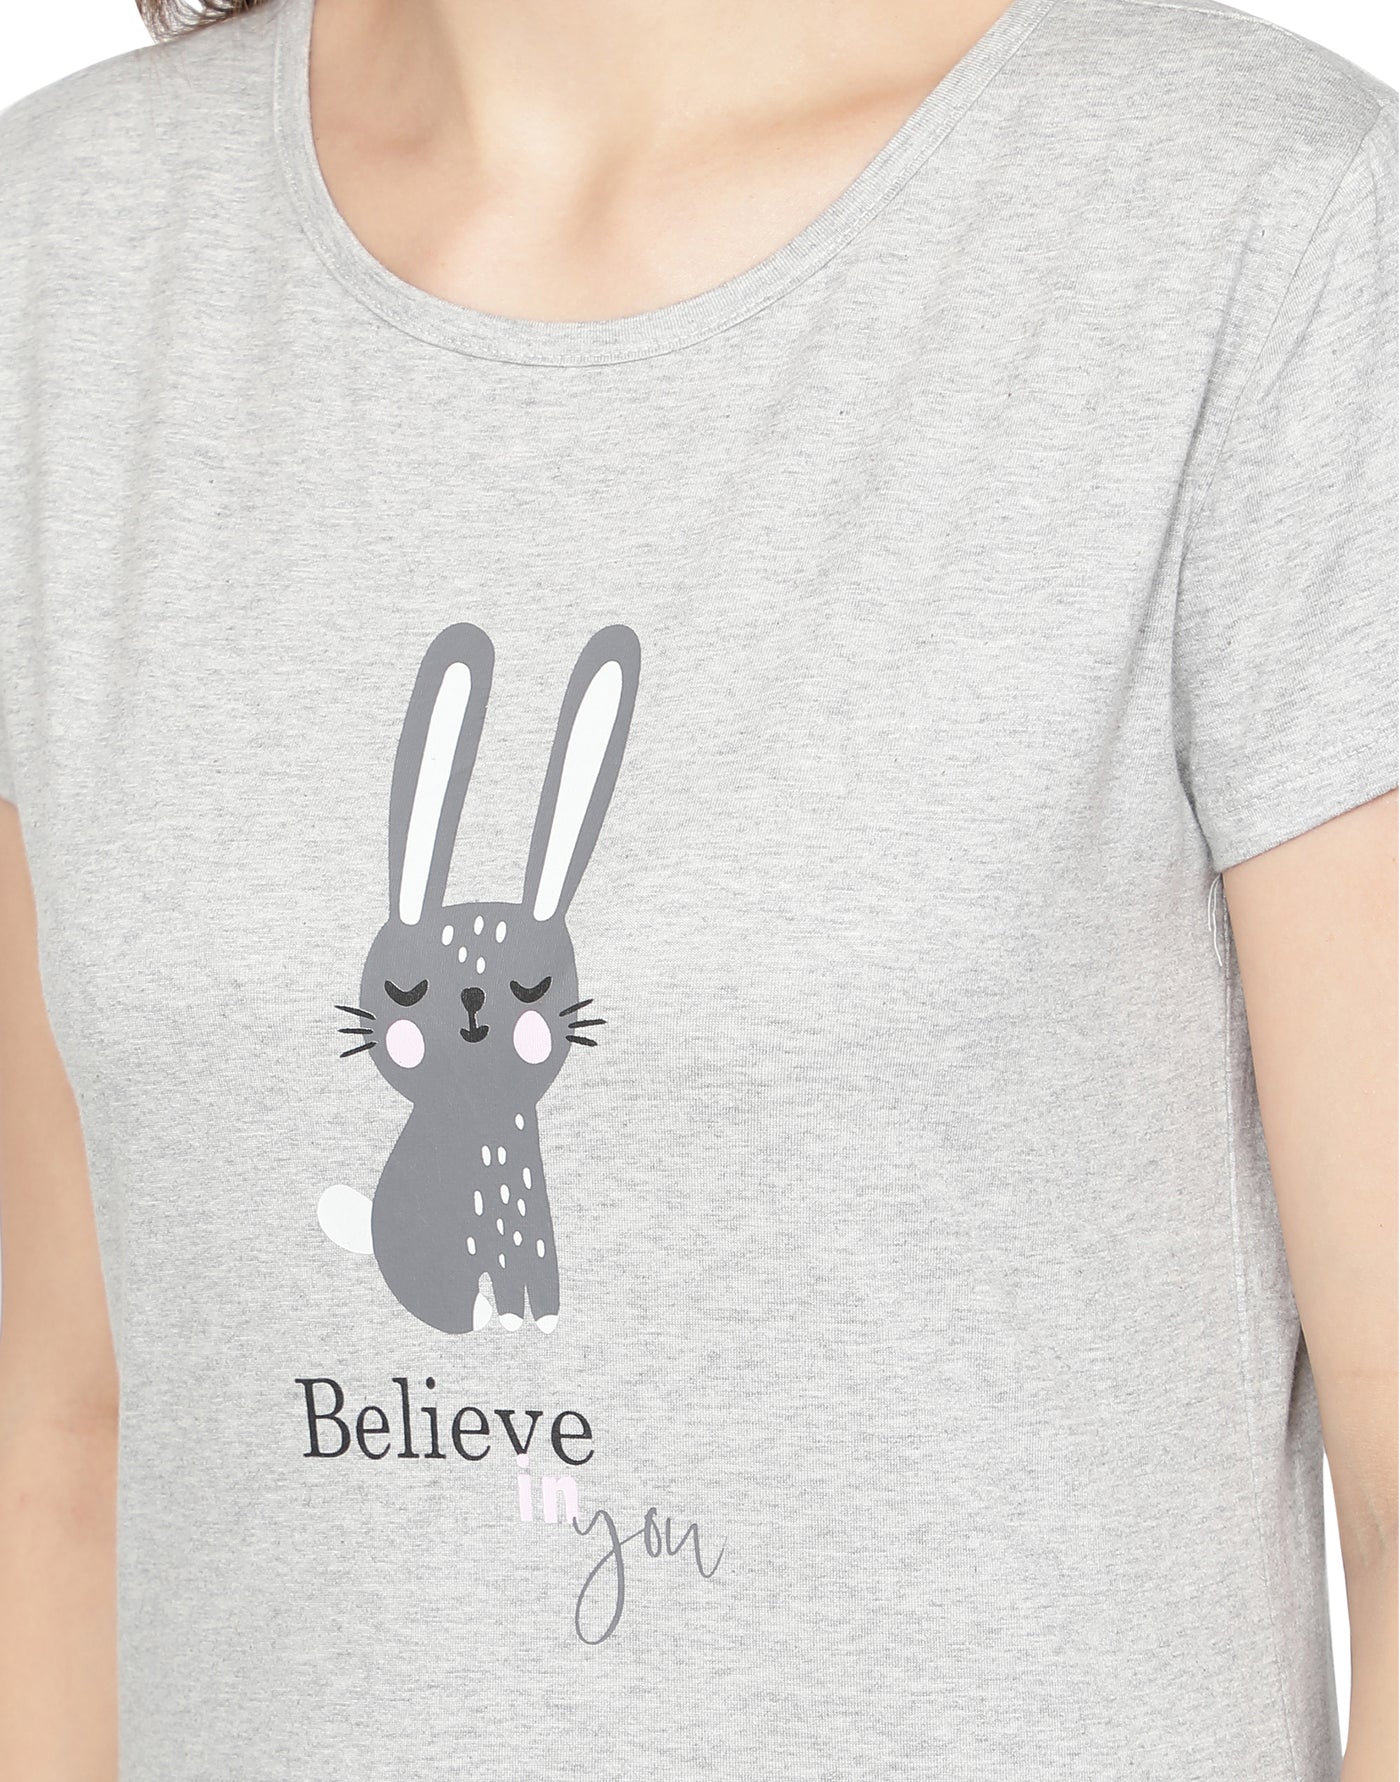 Pyjama Set for Women-Cute Bunny Print